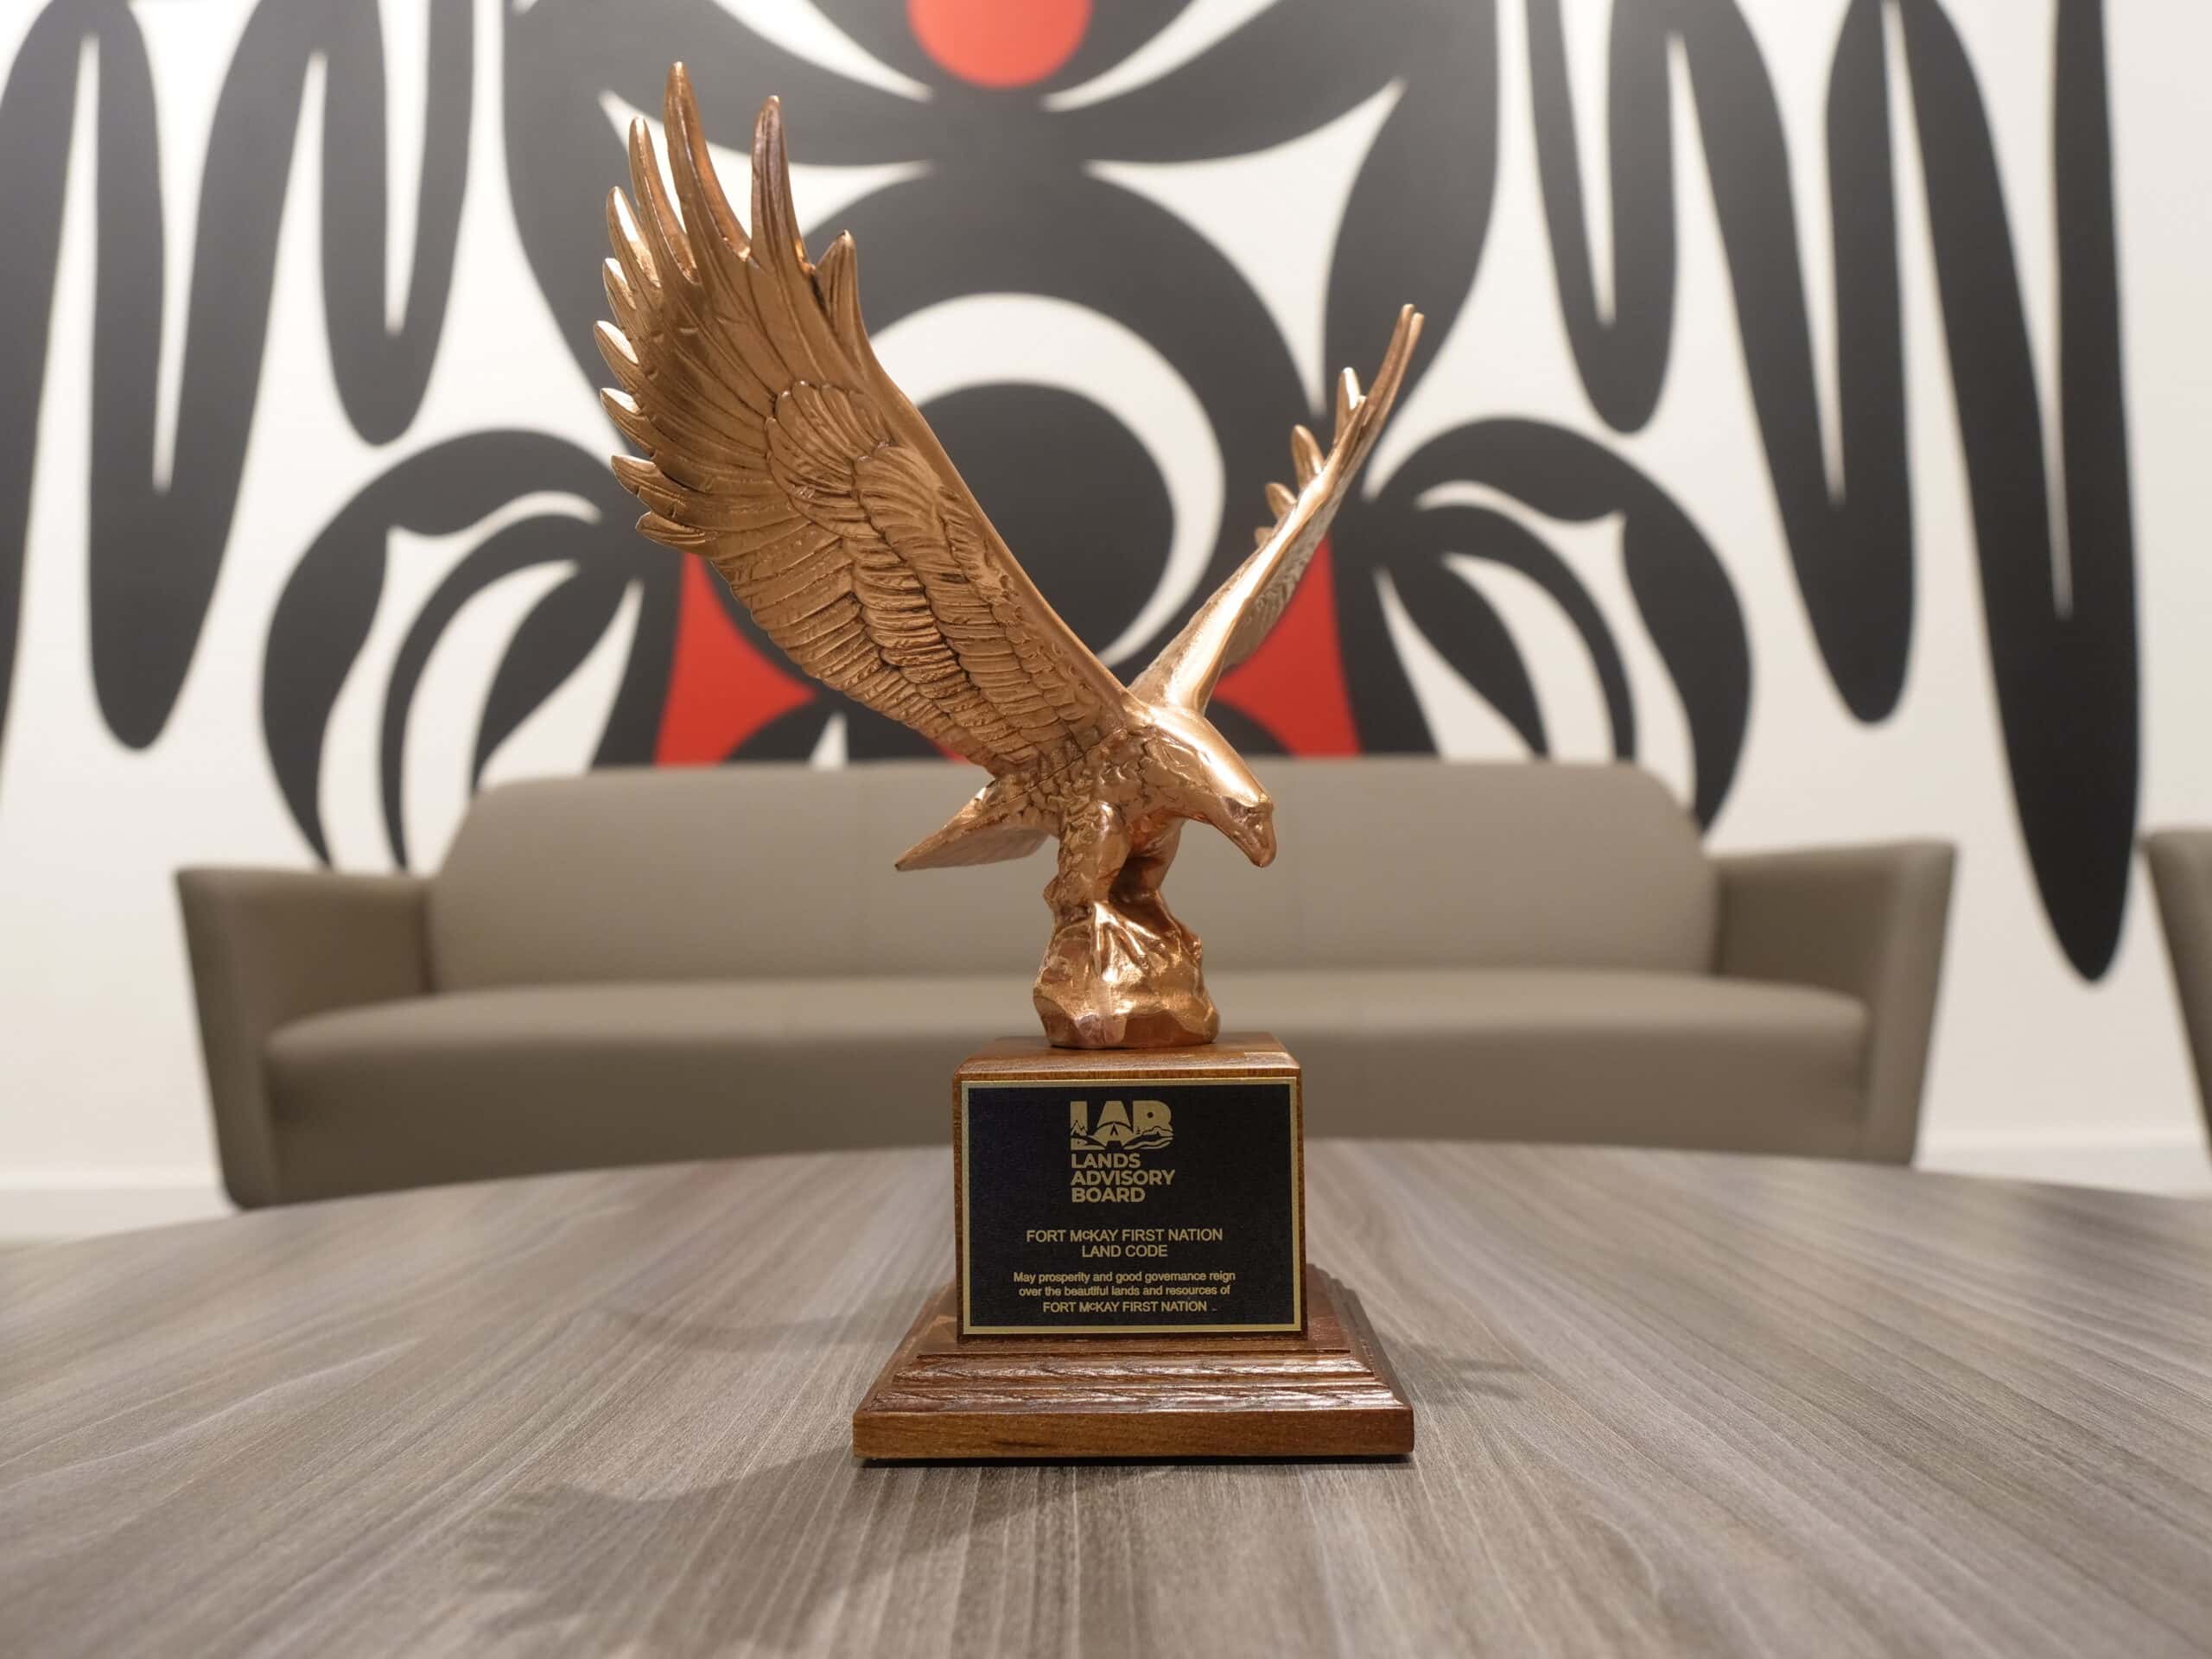 LAB Eagle Award- Fort McKay First Nation